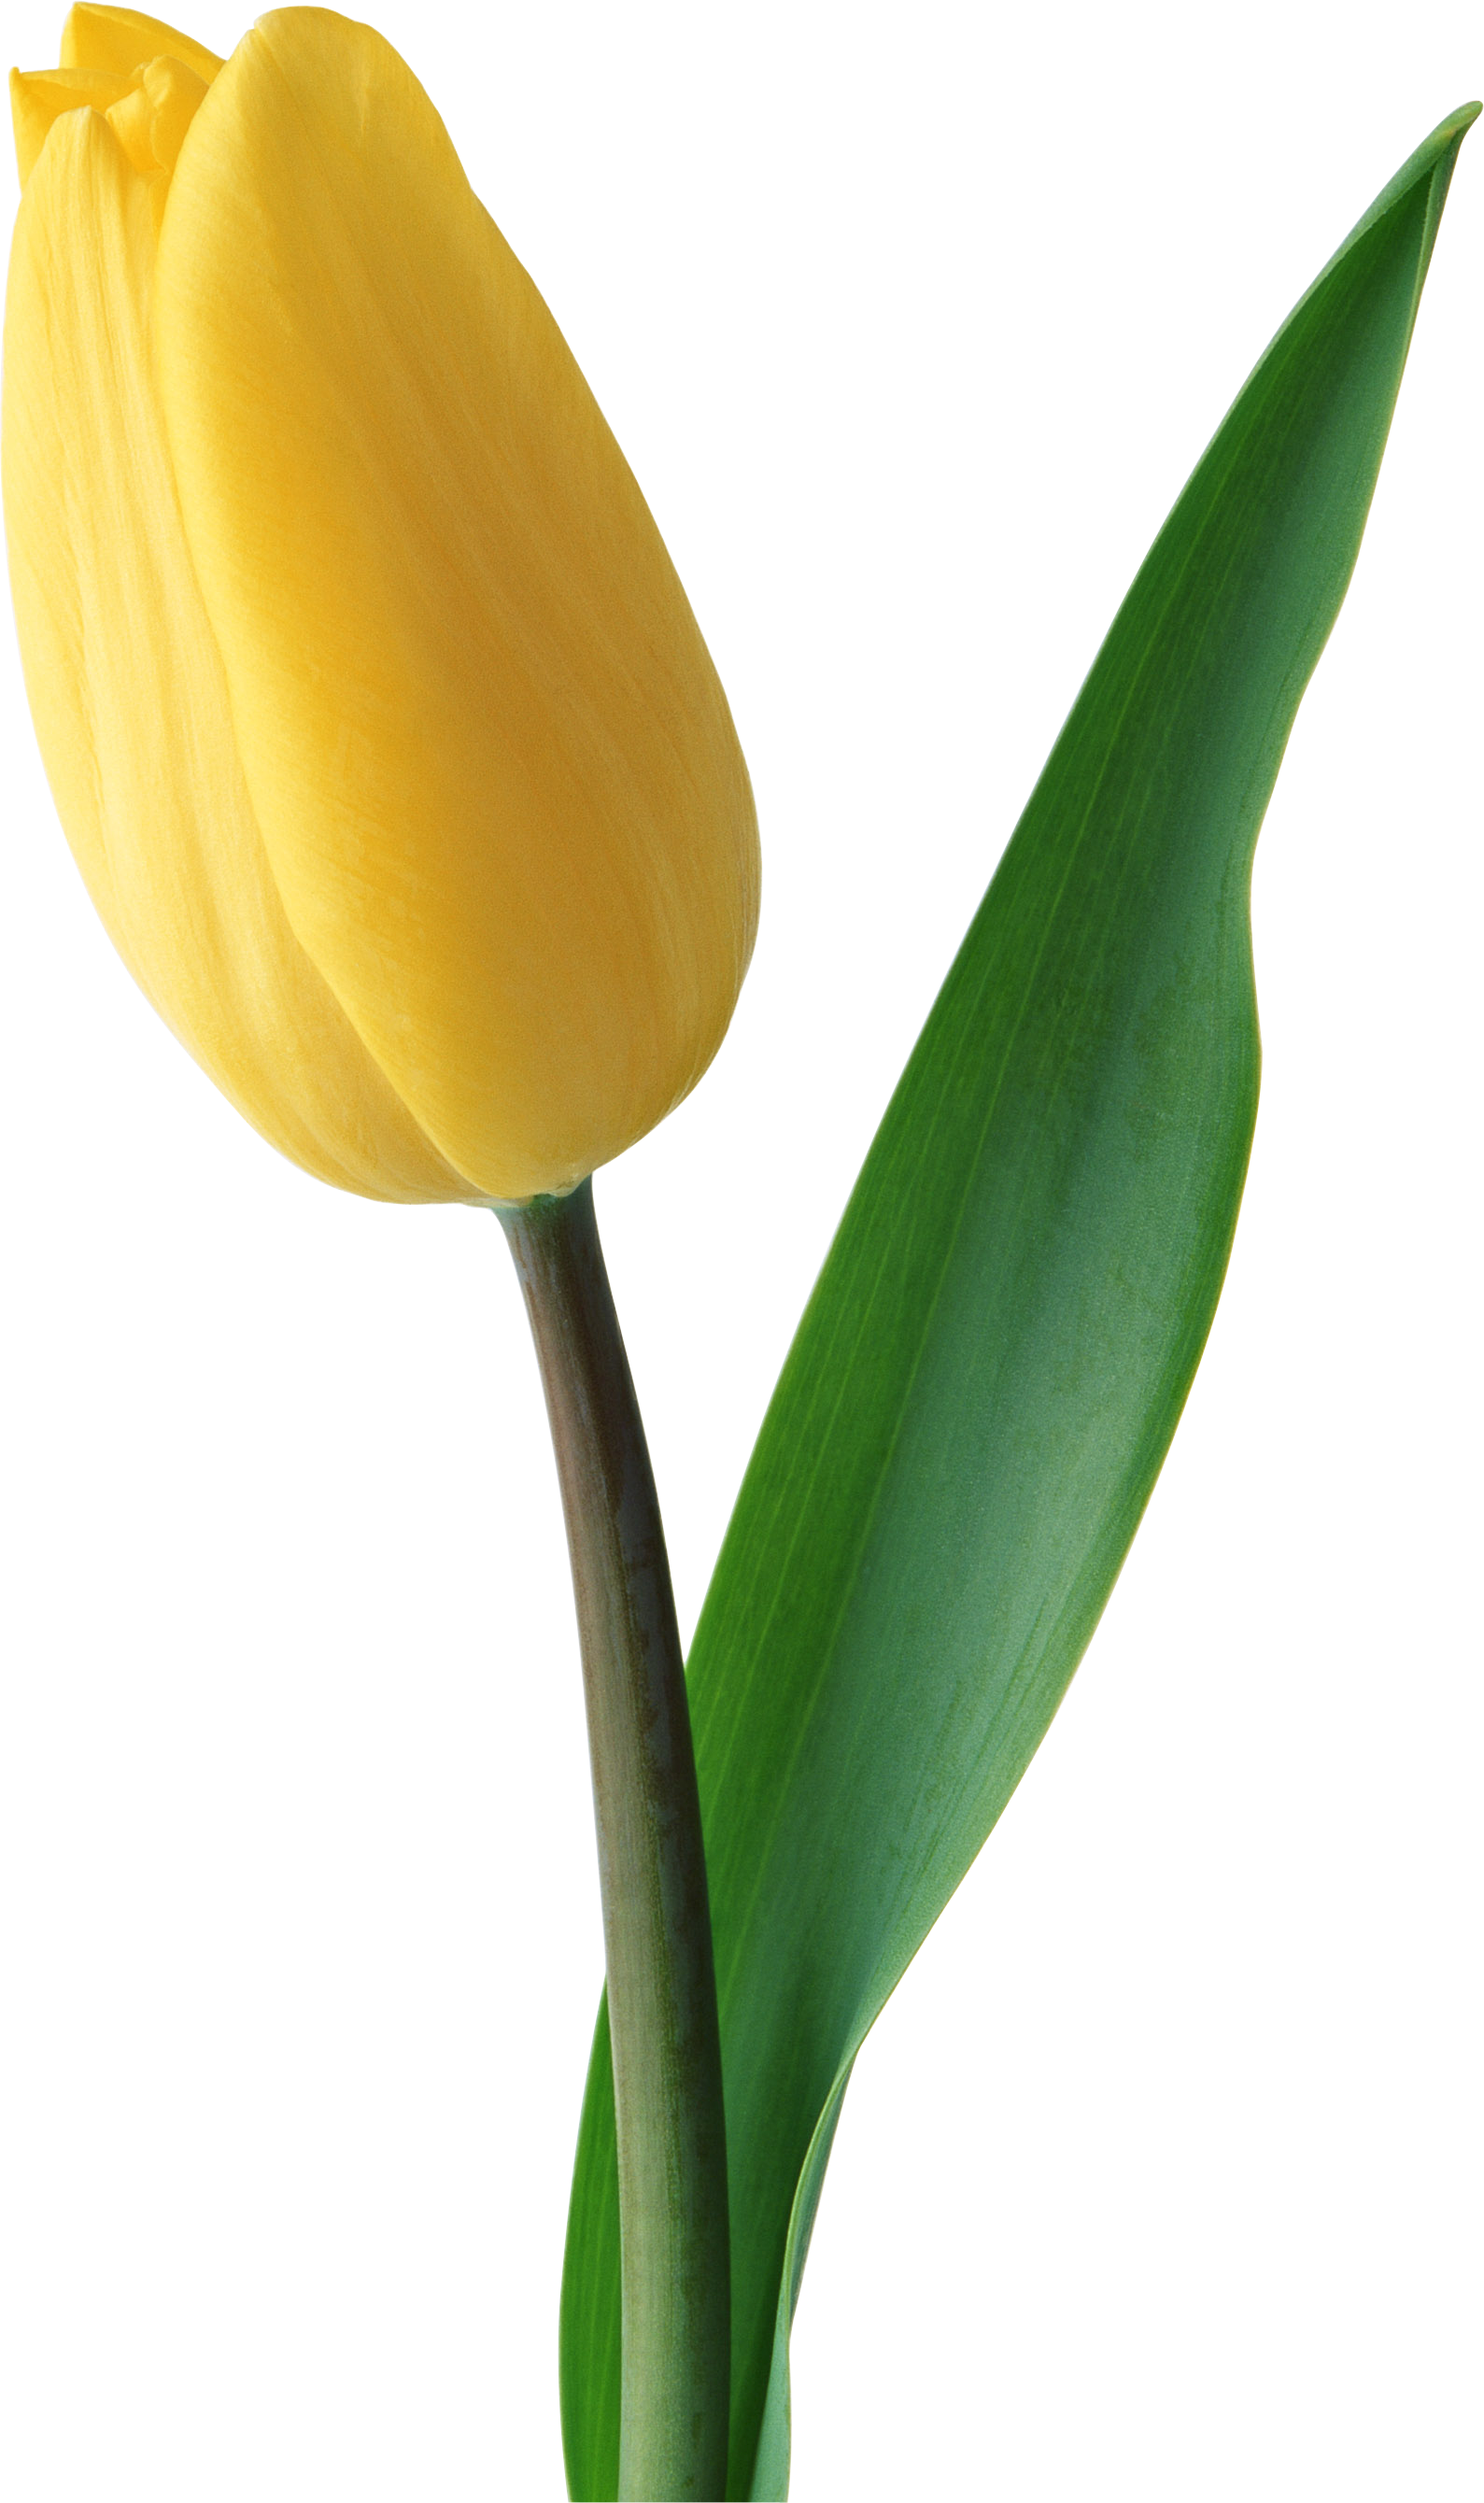 Yellow tulip PNG image